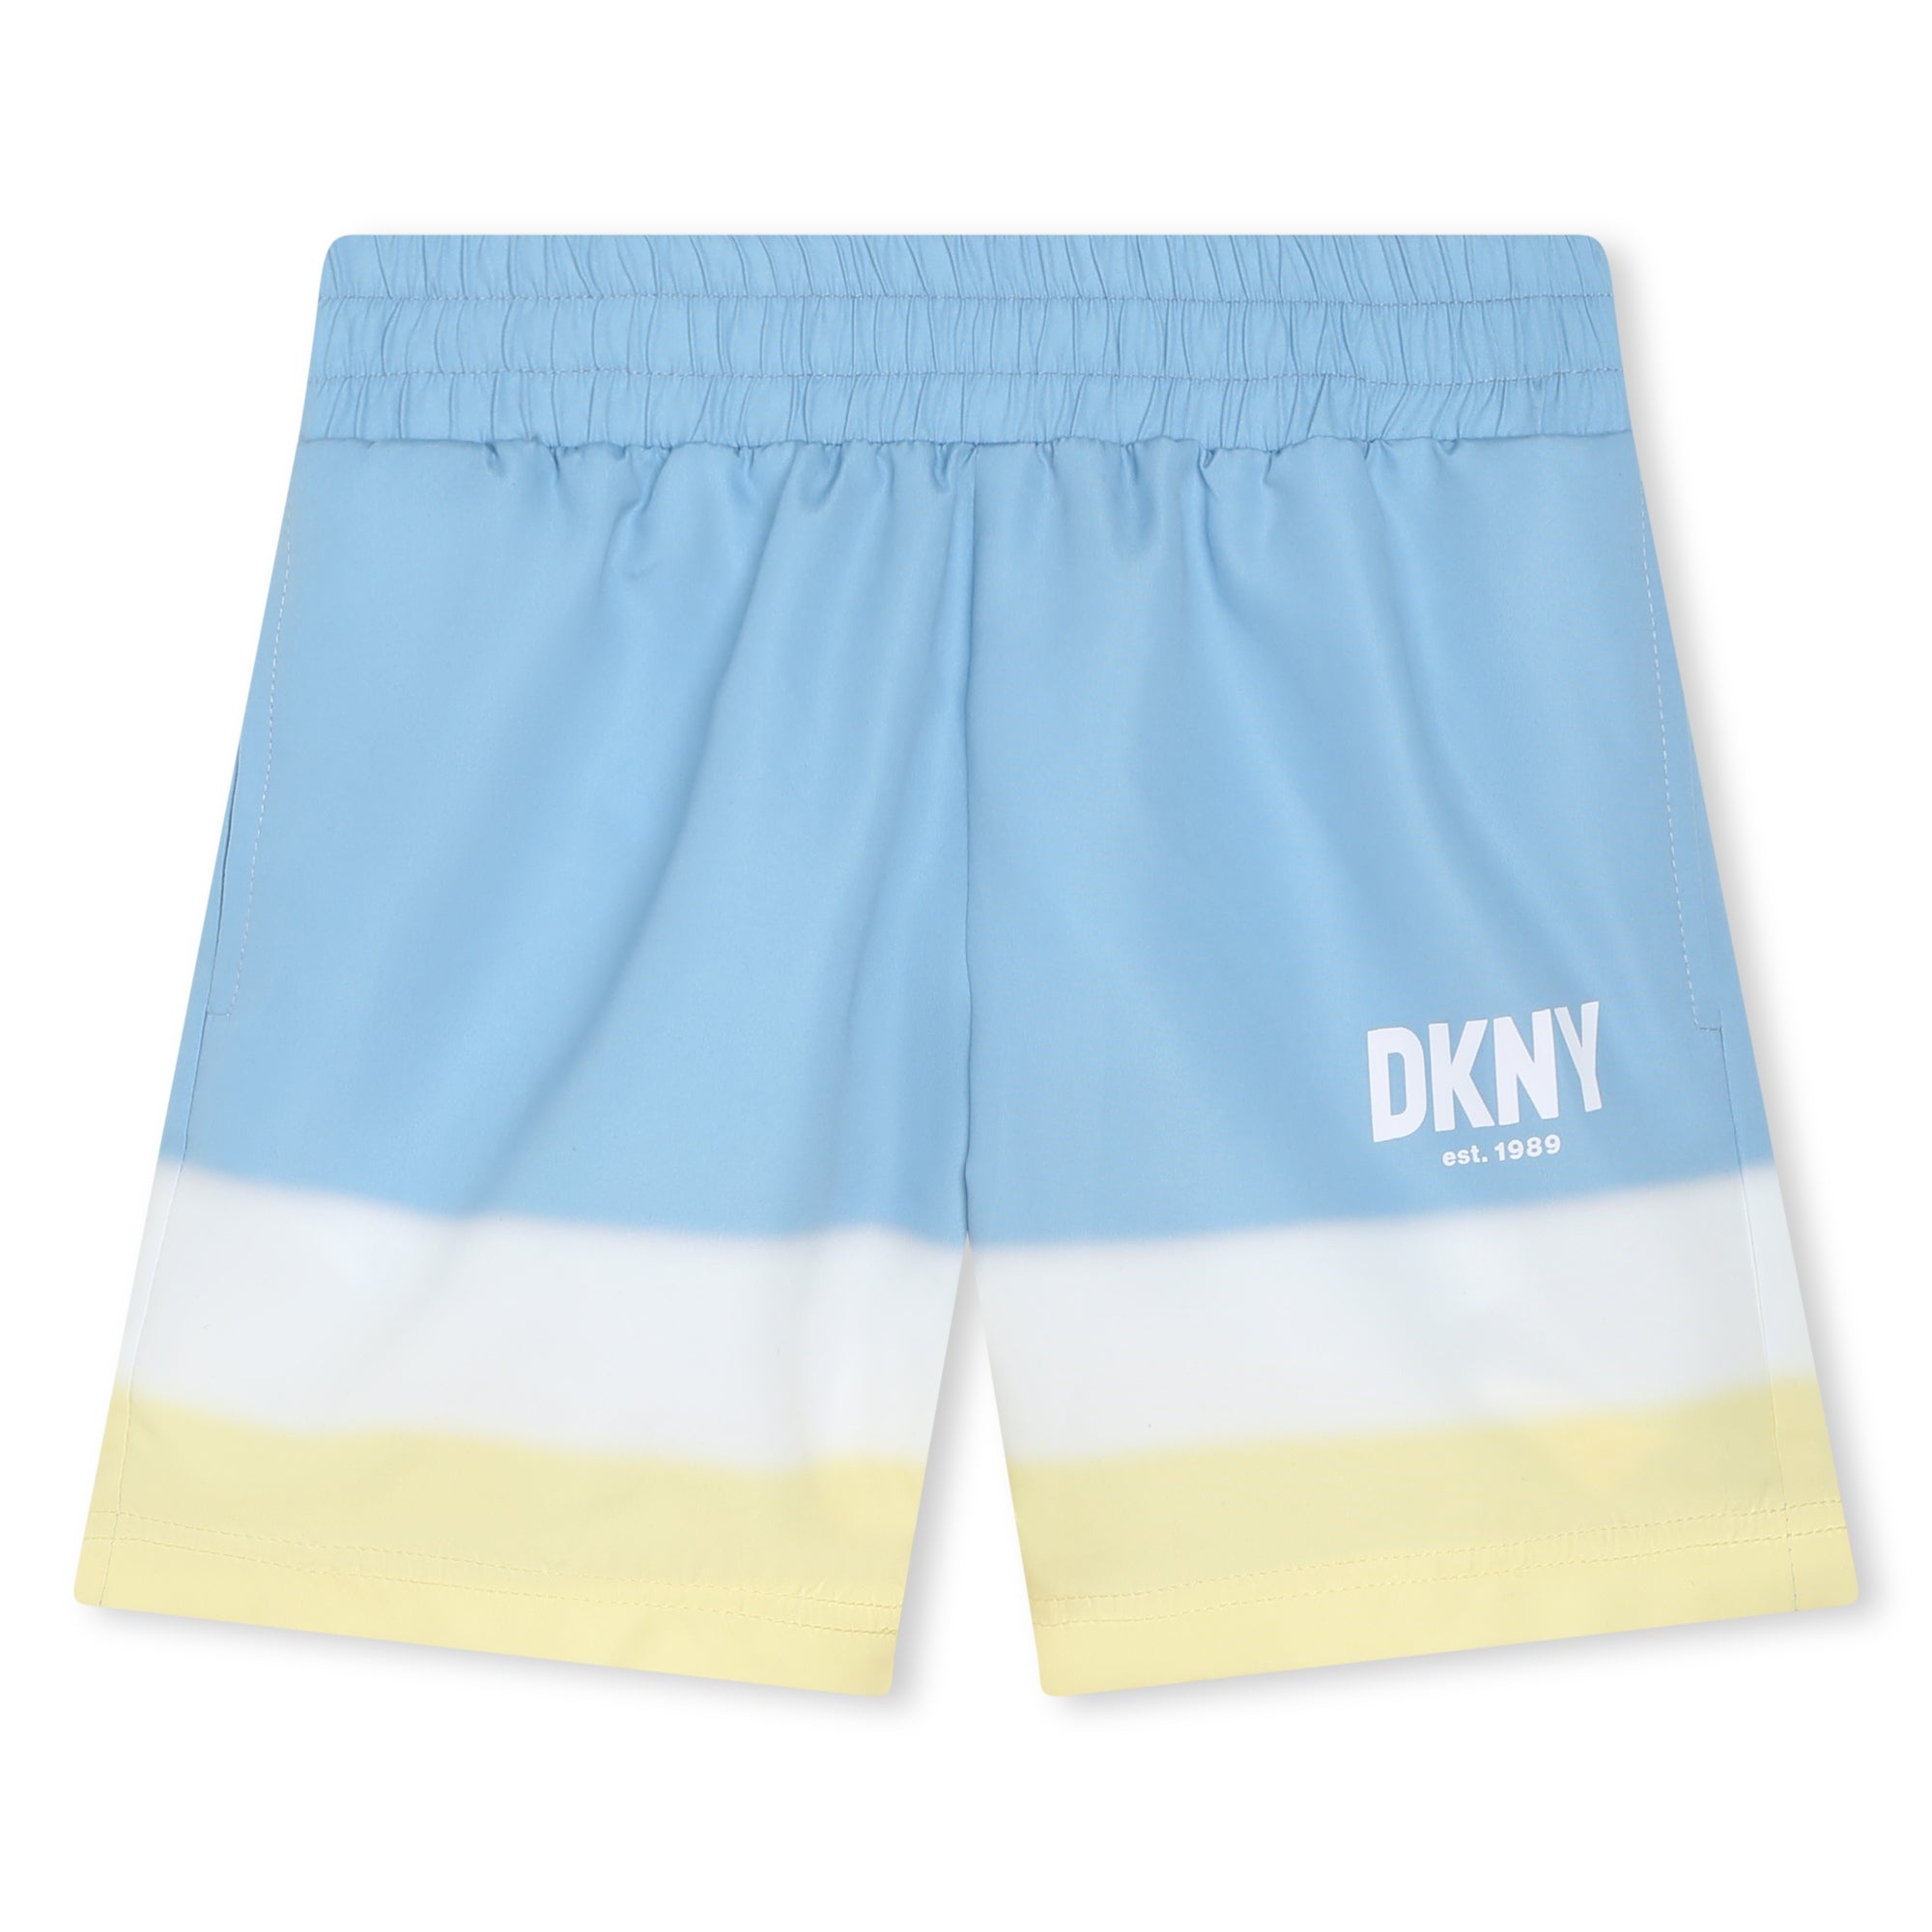 DKNY Pale Blue and Yellow Logo Swim Shorts